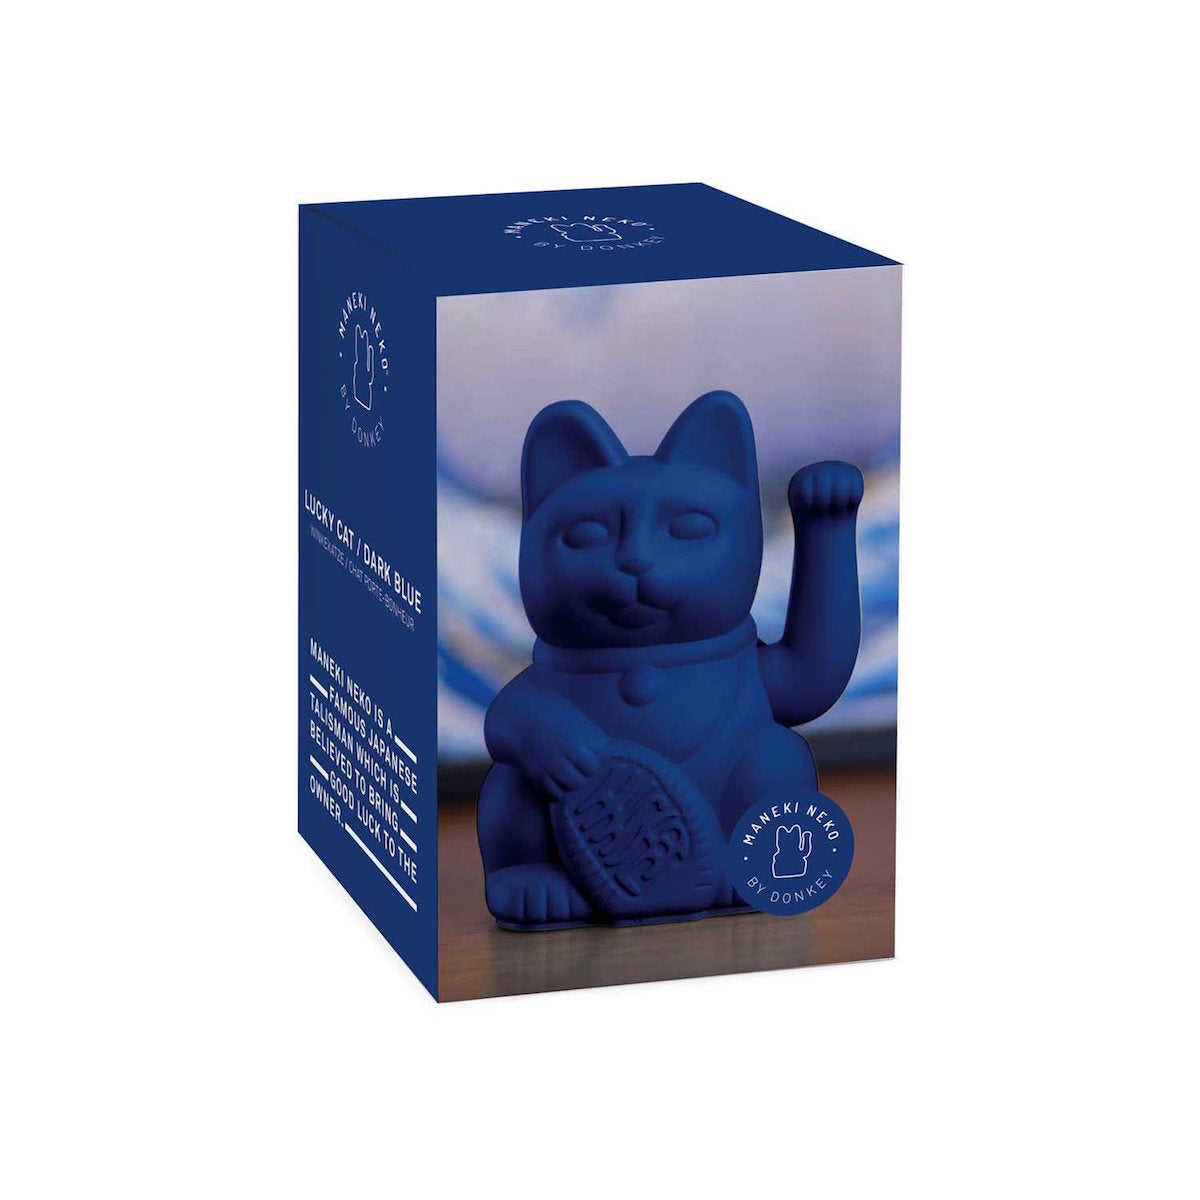 Manekineko, chat porte-bonheur dark blue - Donkey Products